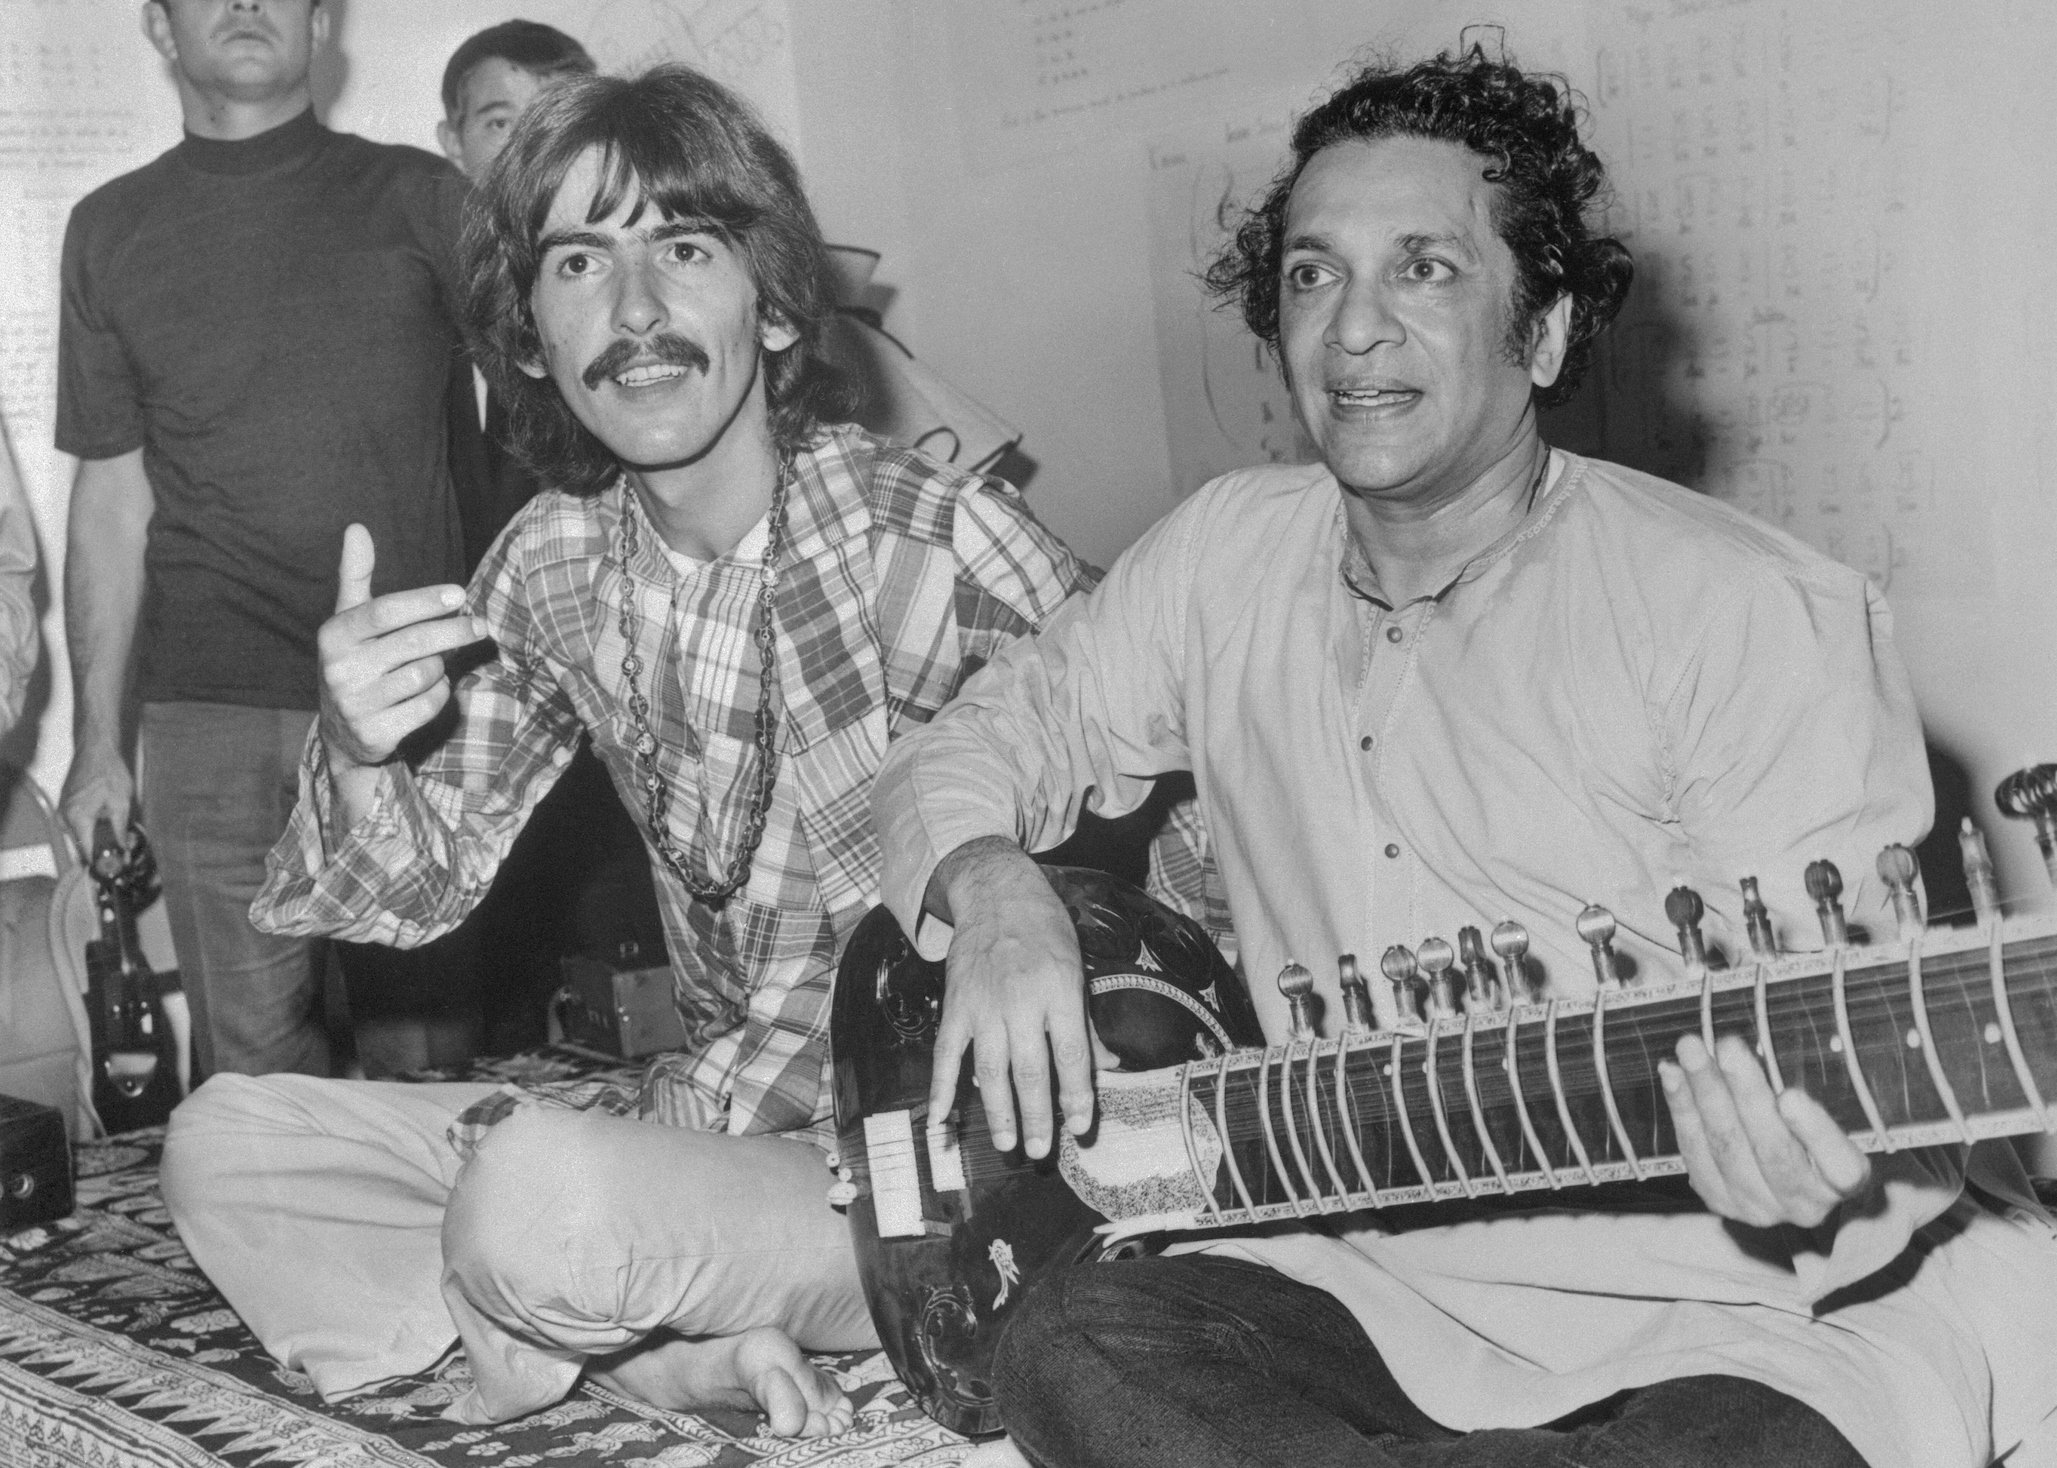 George Harrison listens to Ravi Shankar play the sitar